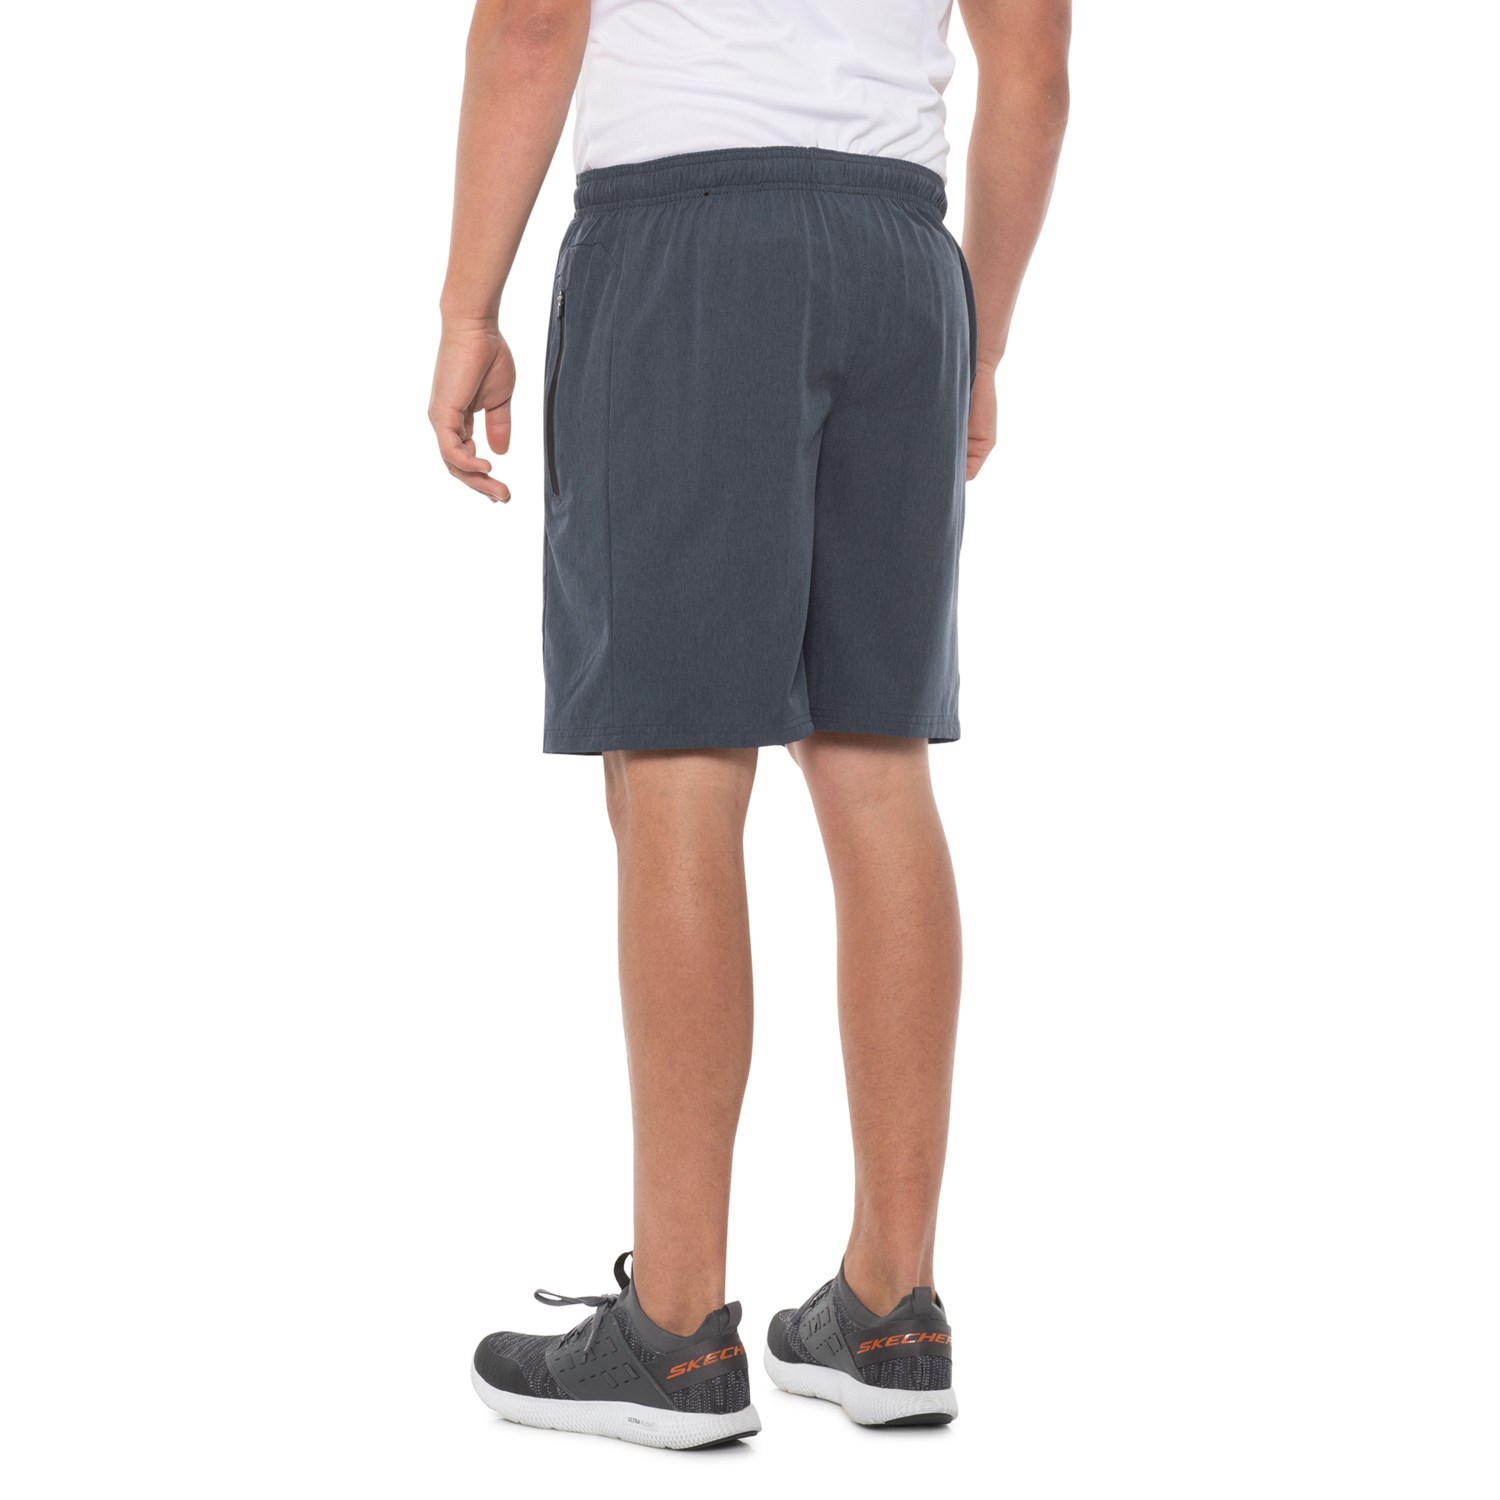 Leg3nd Bonded Pocket Woven Shorts (For Men) - Save 27%